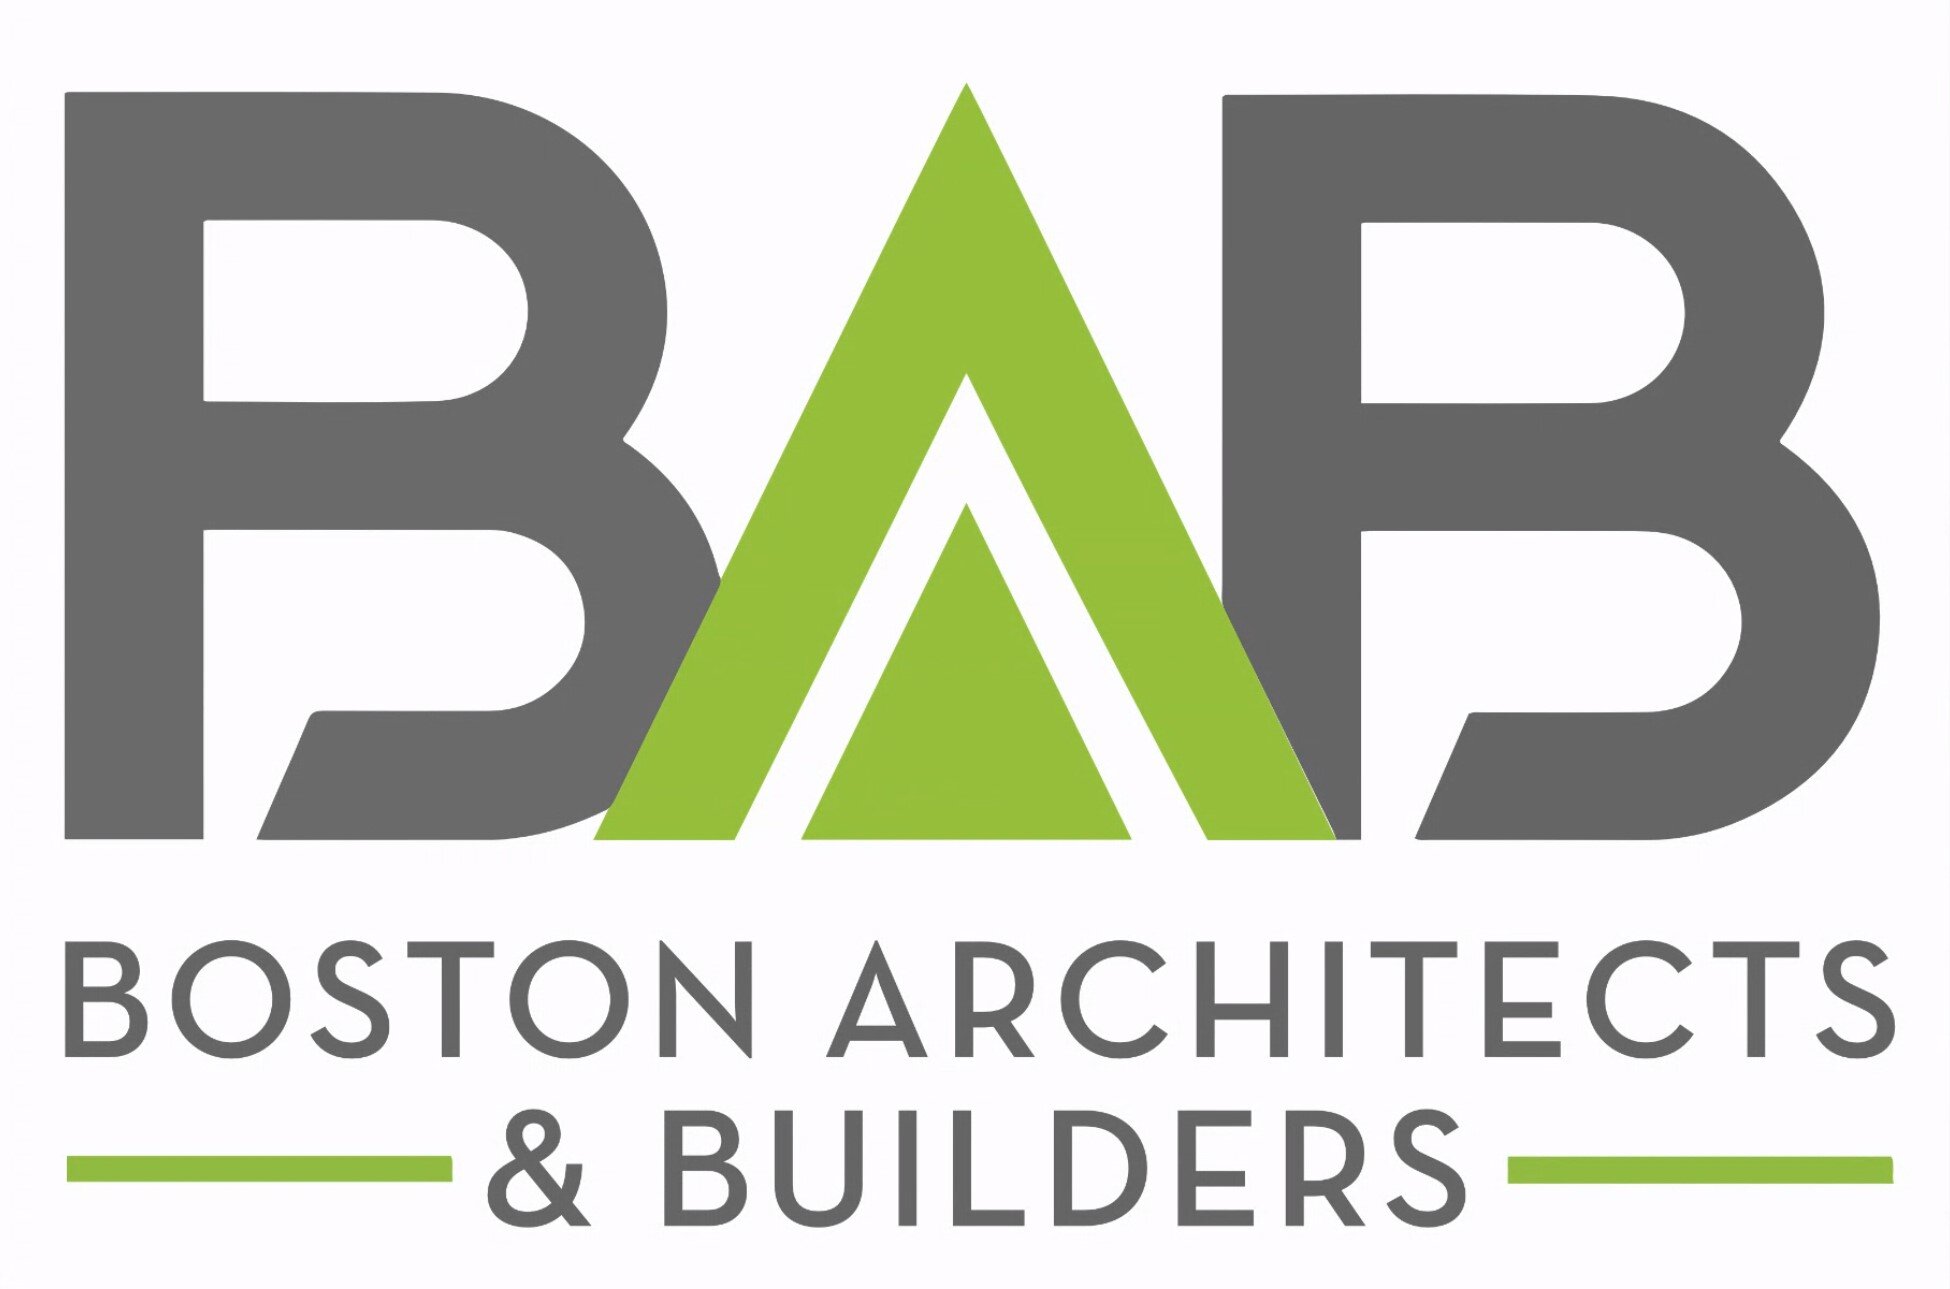 Boston Architects & Builders / Boston Real Estate Buyers logo